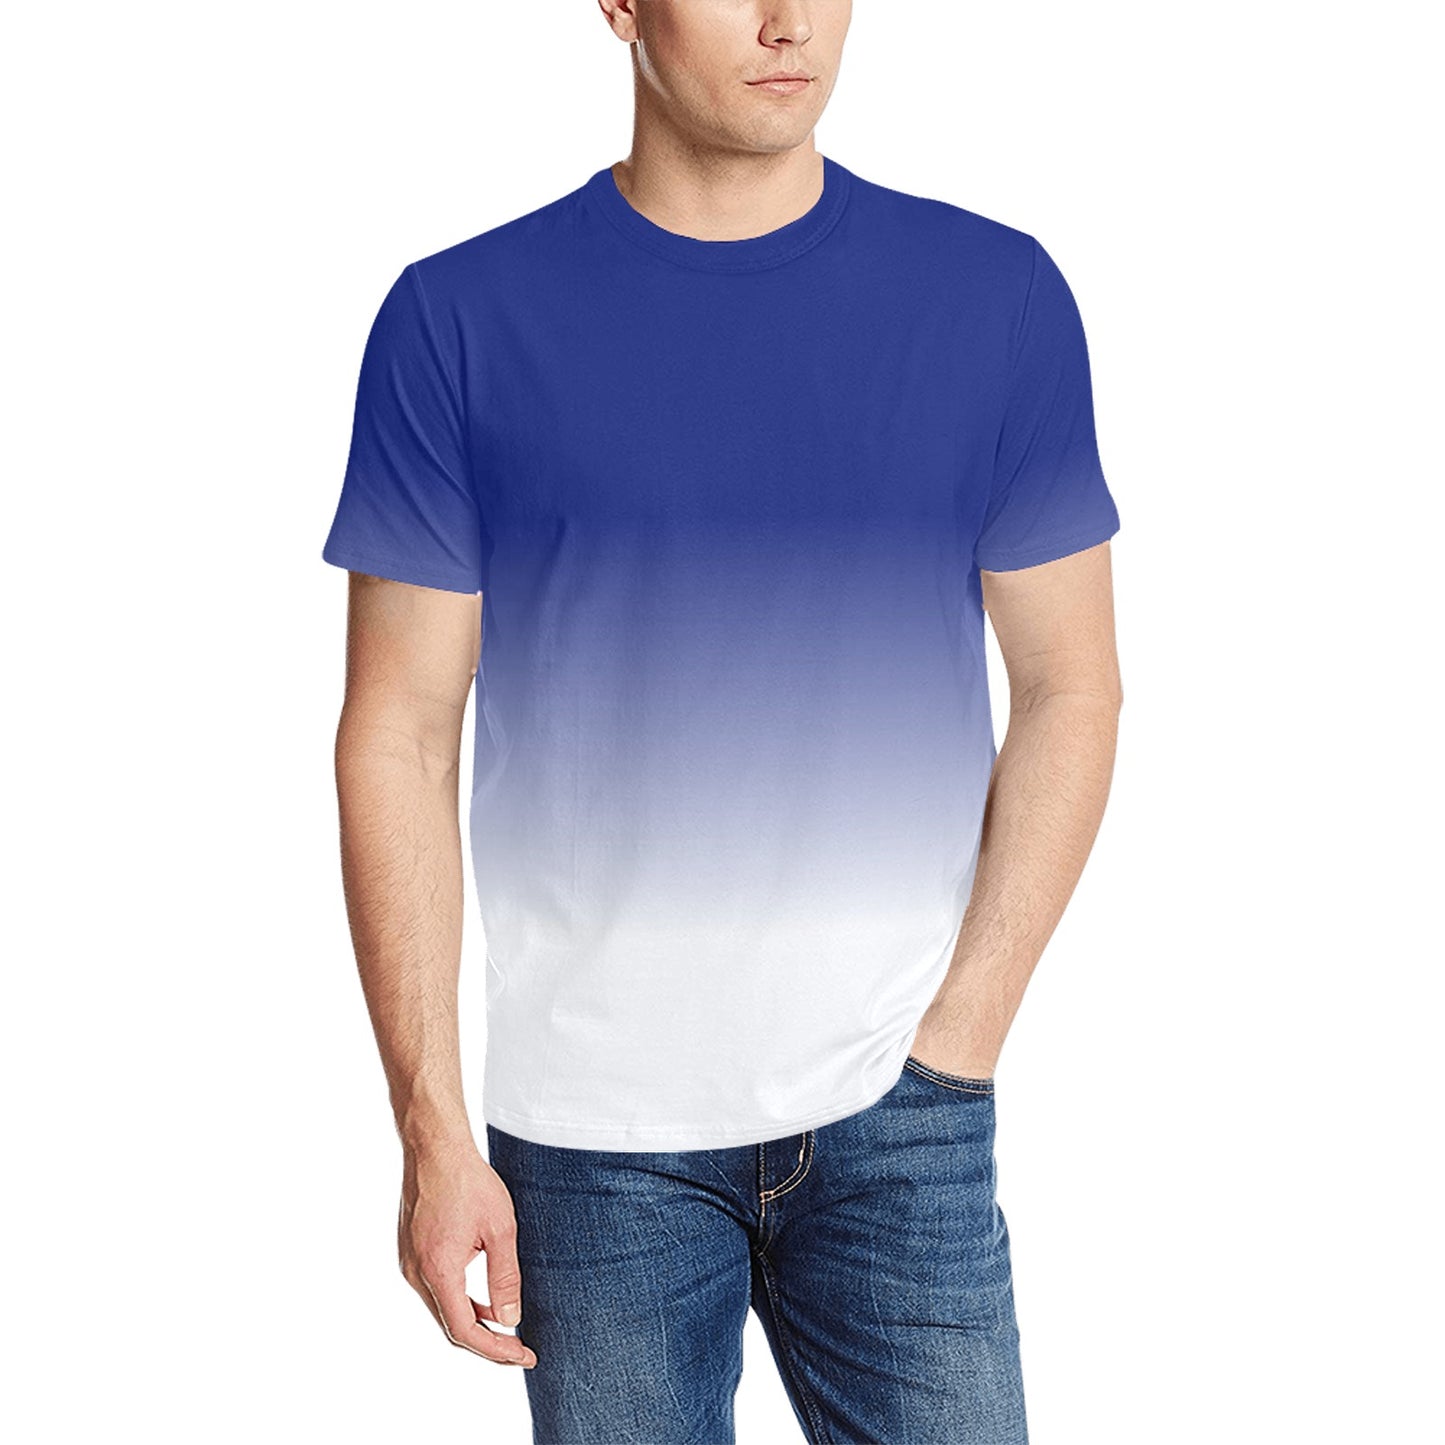 Blue White Ombre Tshirt, Gradient Tie dye Designer Graphic Aesthetic Lightweight Crewneck Men Women Tee Top Short Sleeve Shirt Starcove Fashion